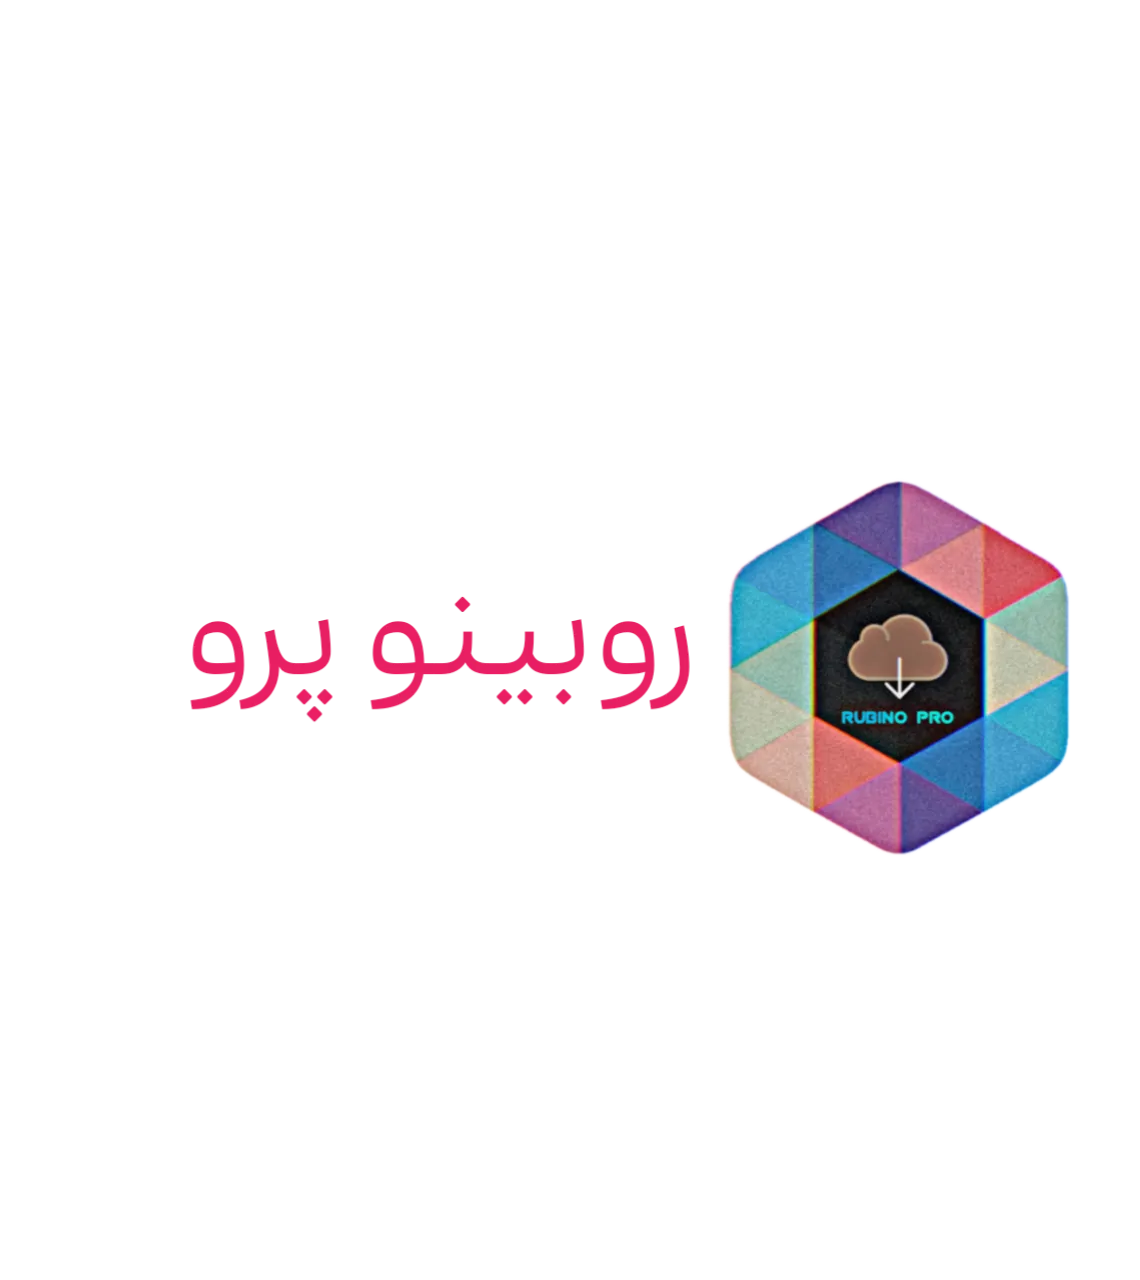 LogoApp